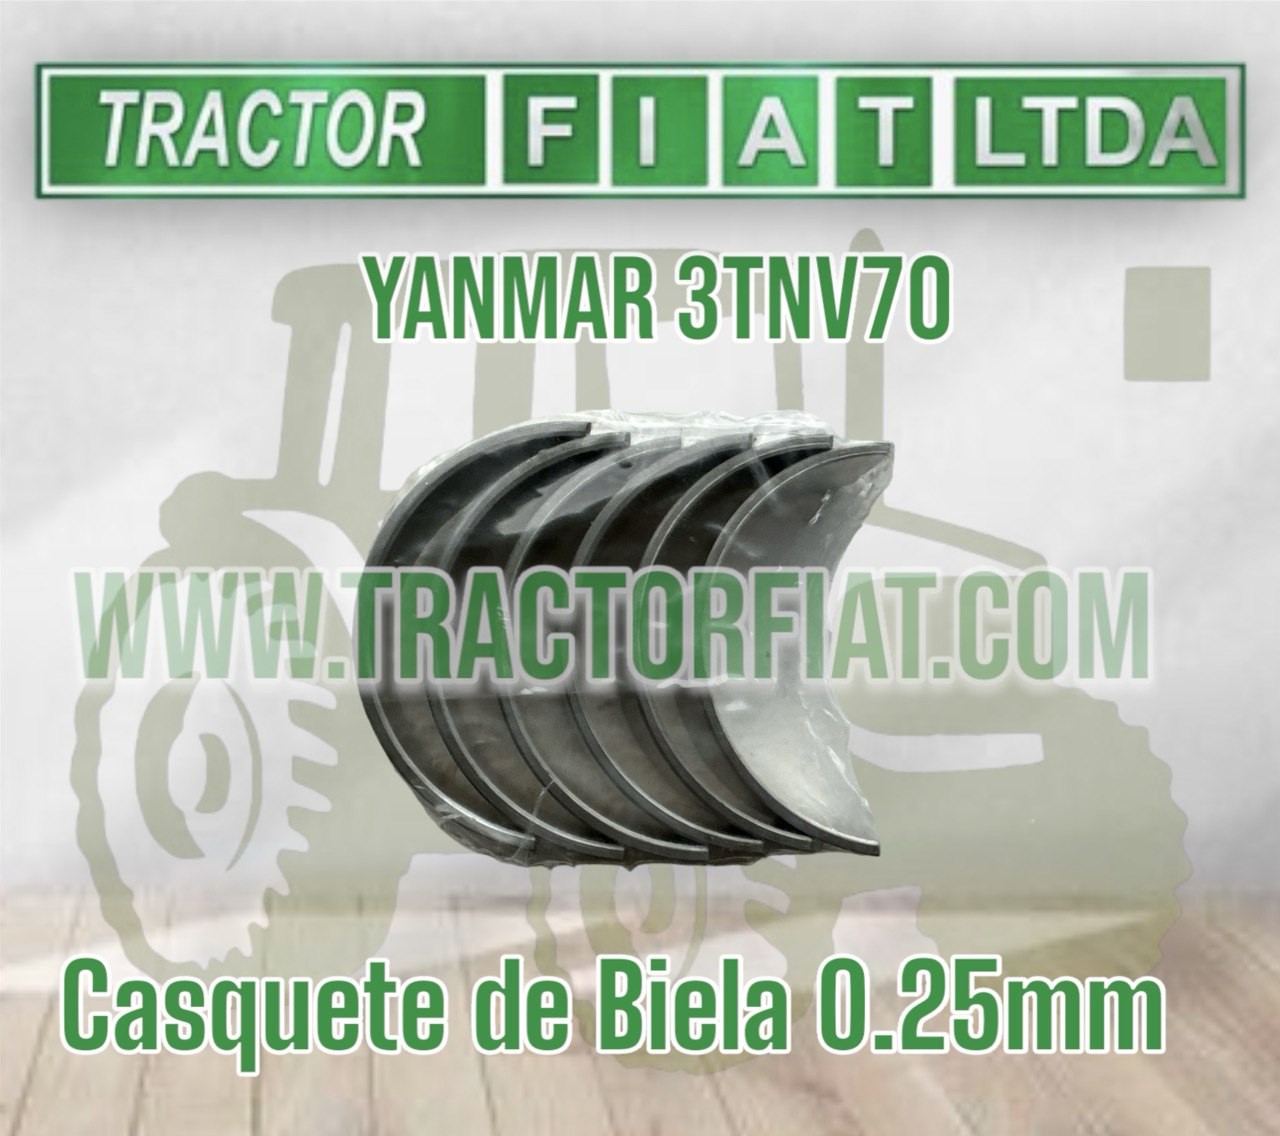 CASQUETES DE BIELA 0.25MM- MOTOR YANMAR 3TNV70